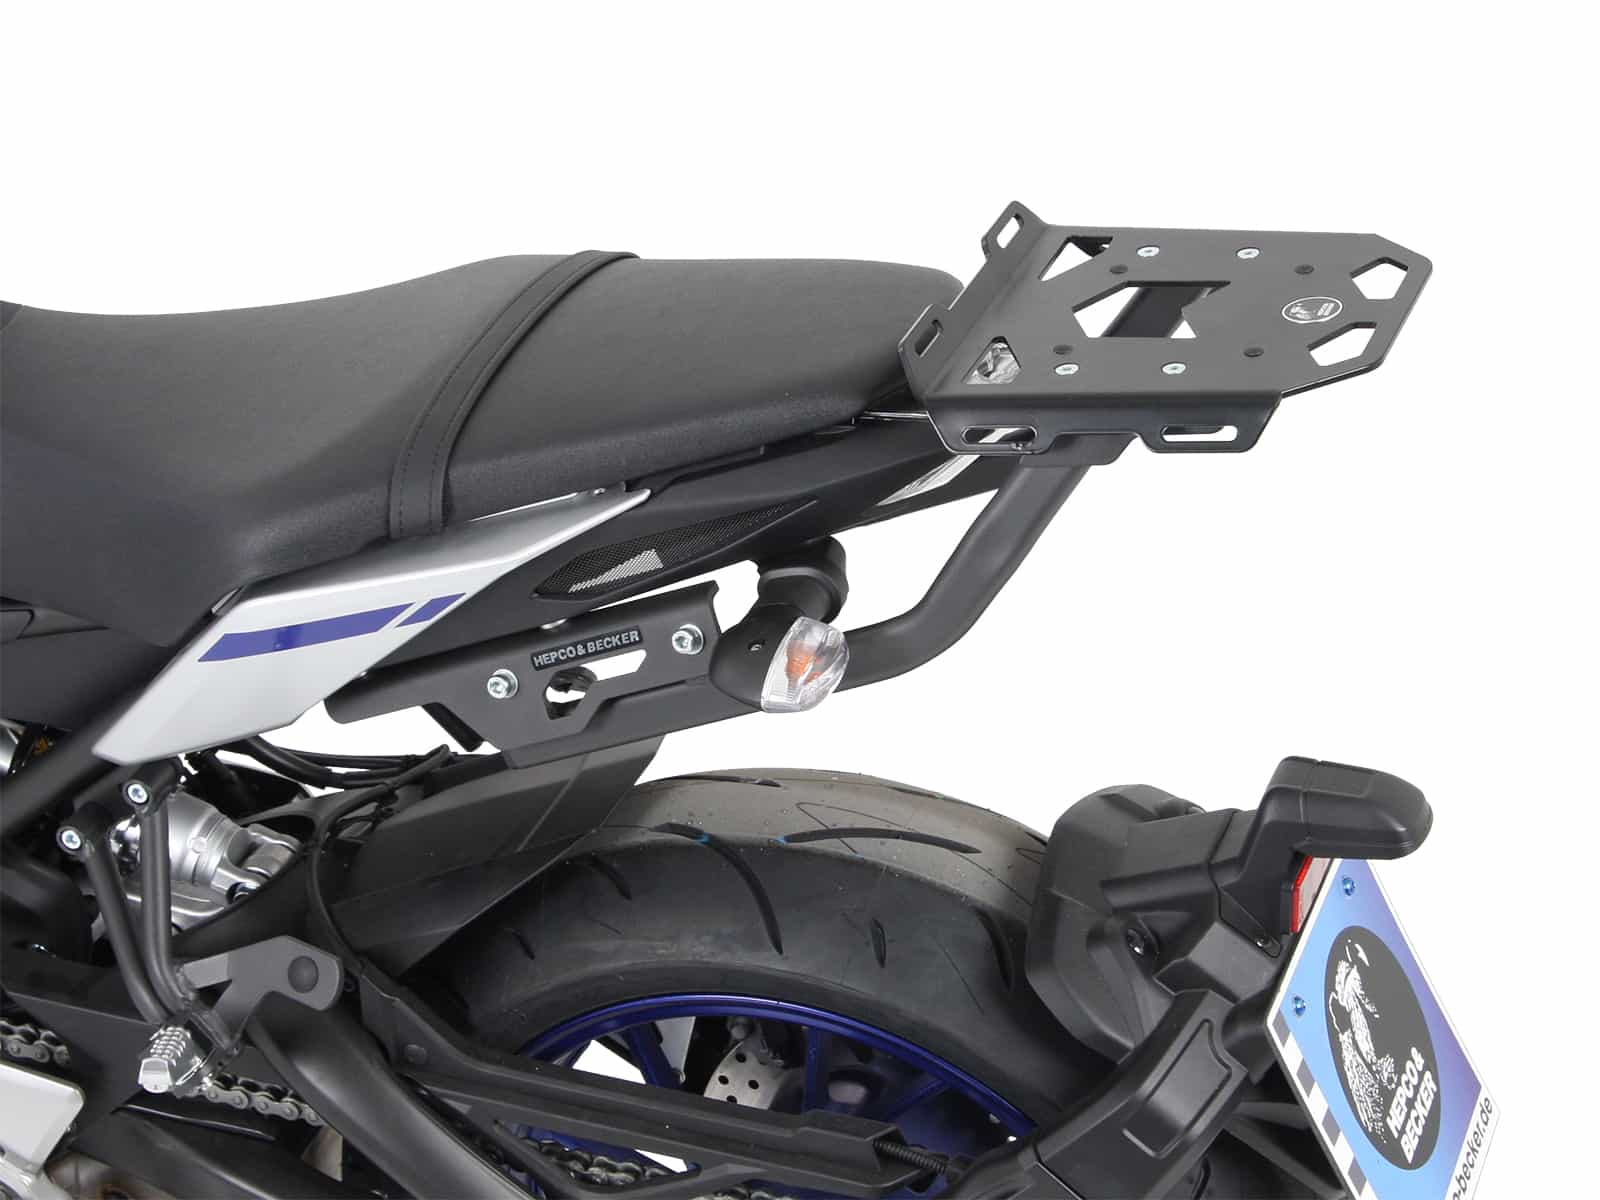 Minirack soft luggage rear rack for Yamaha MT-09 SP (2018-2020)